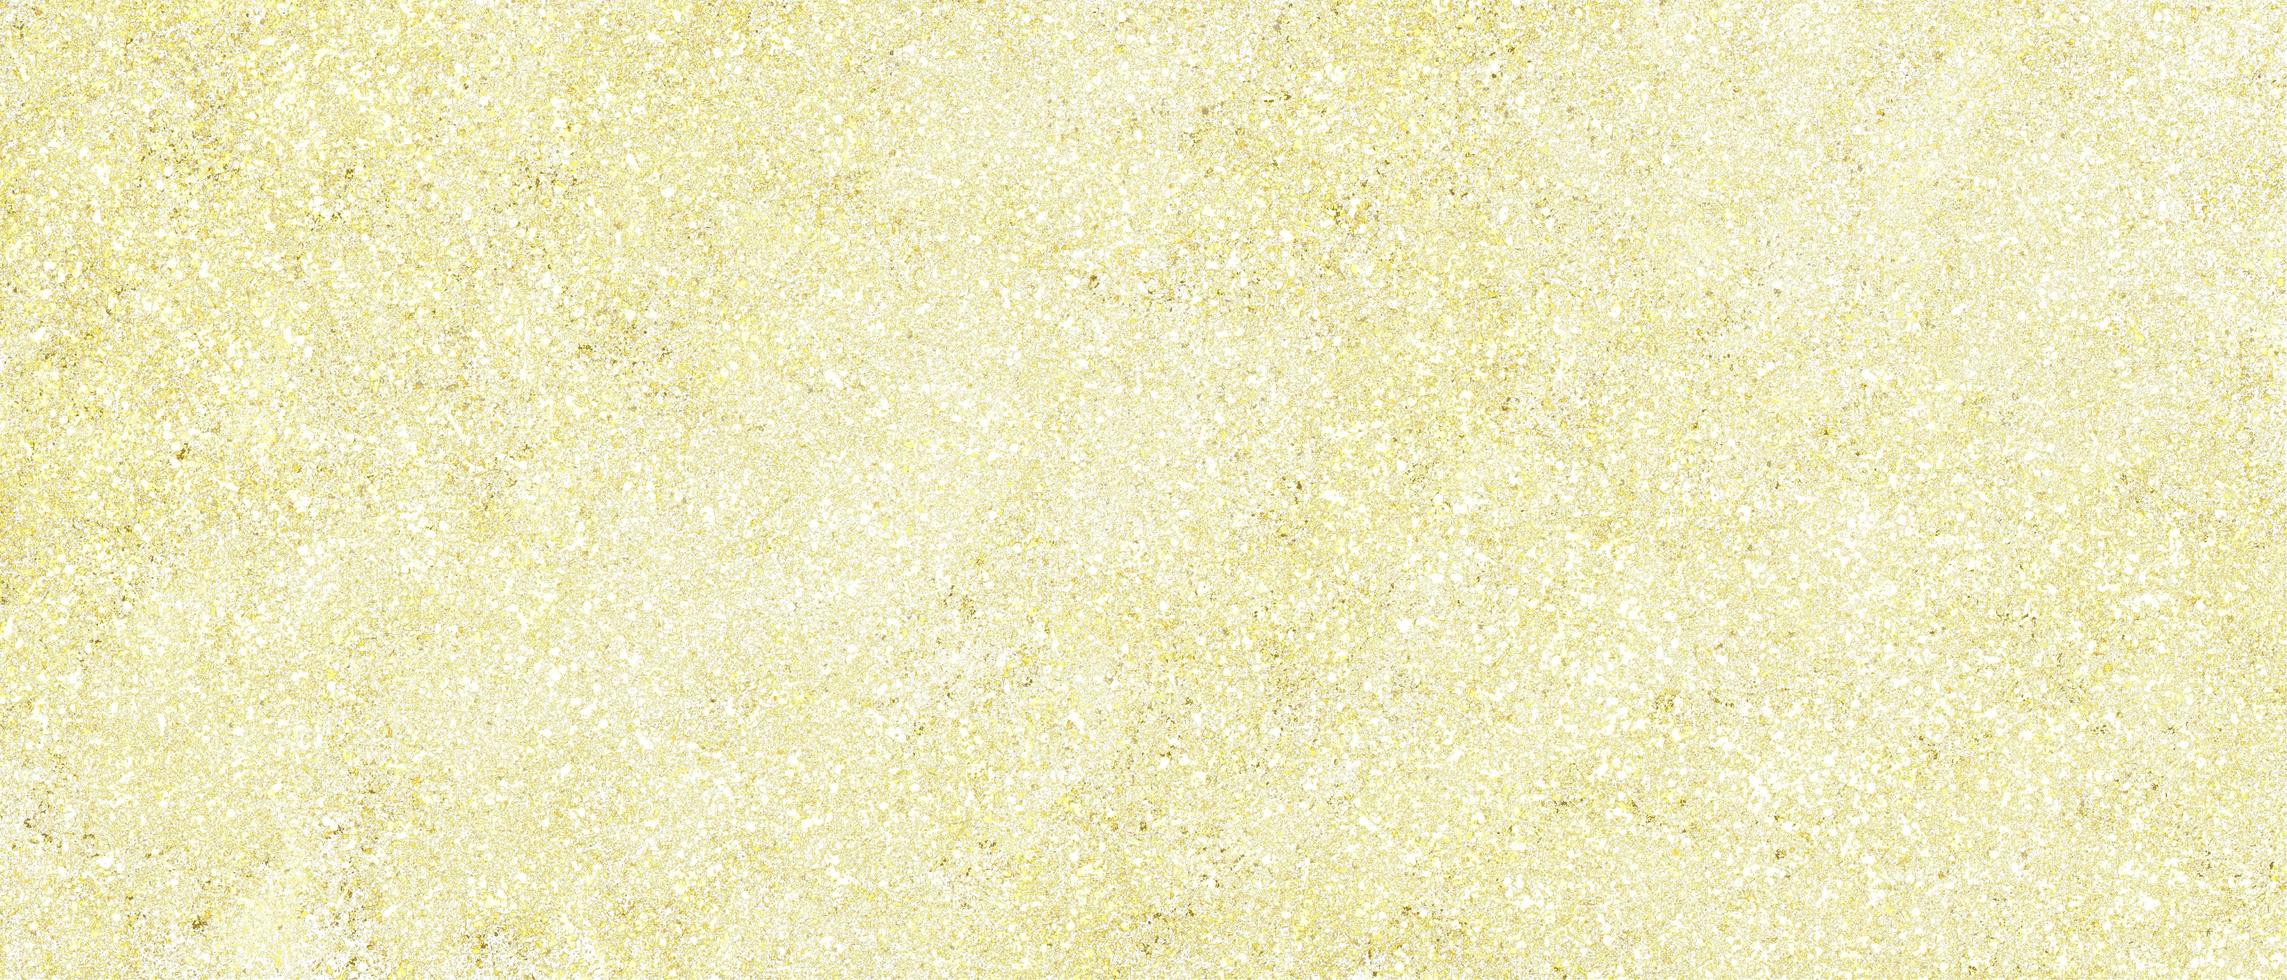 Gold Glitter Frame Holiday Bokeh Background photo